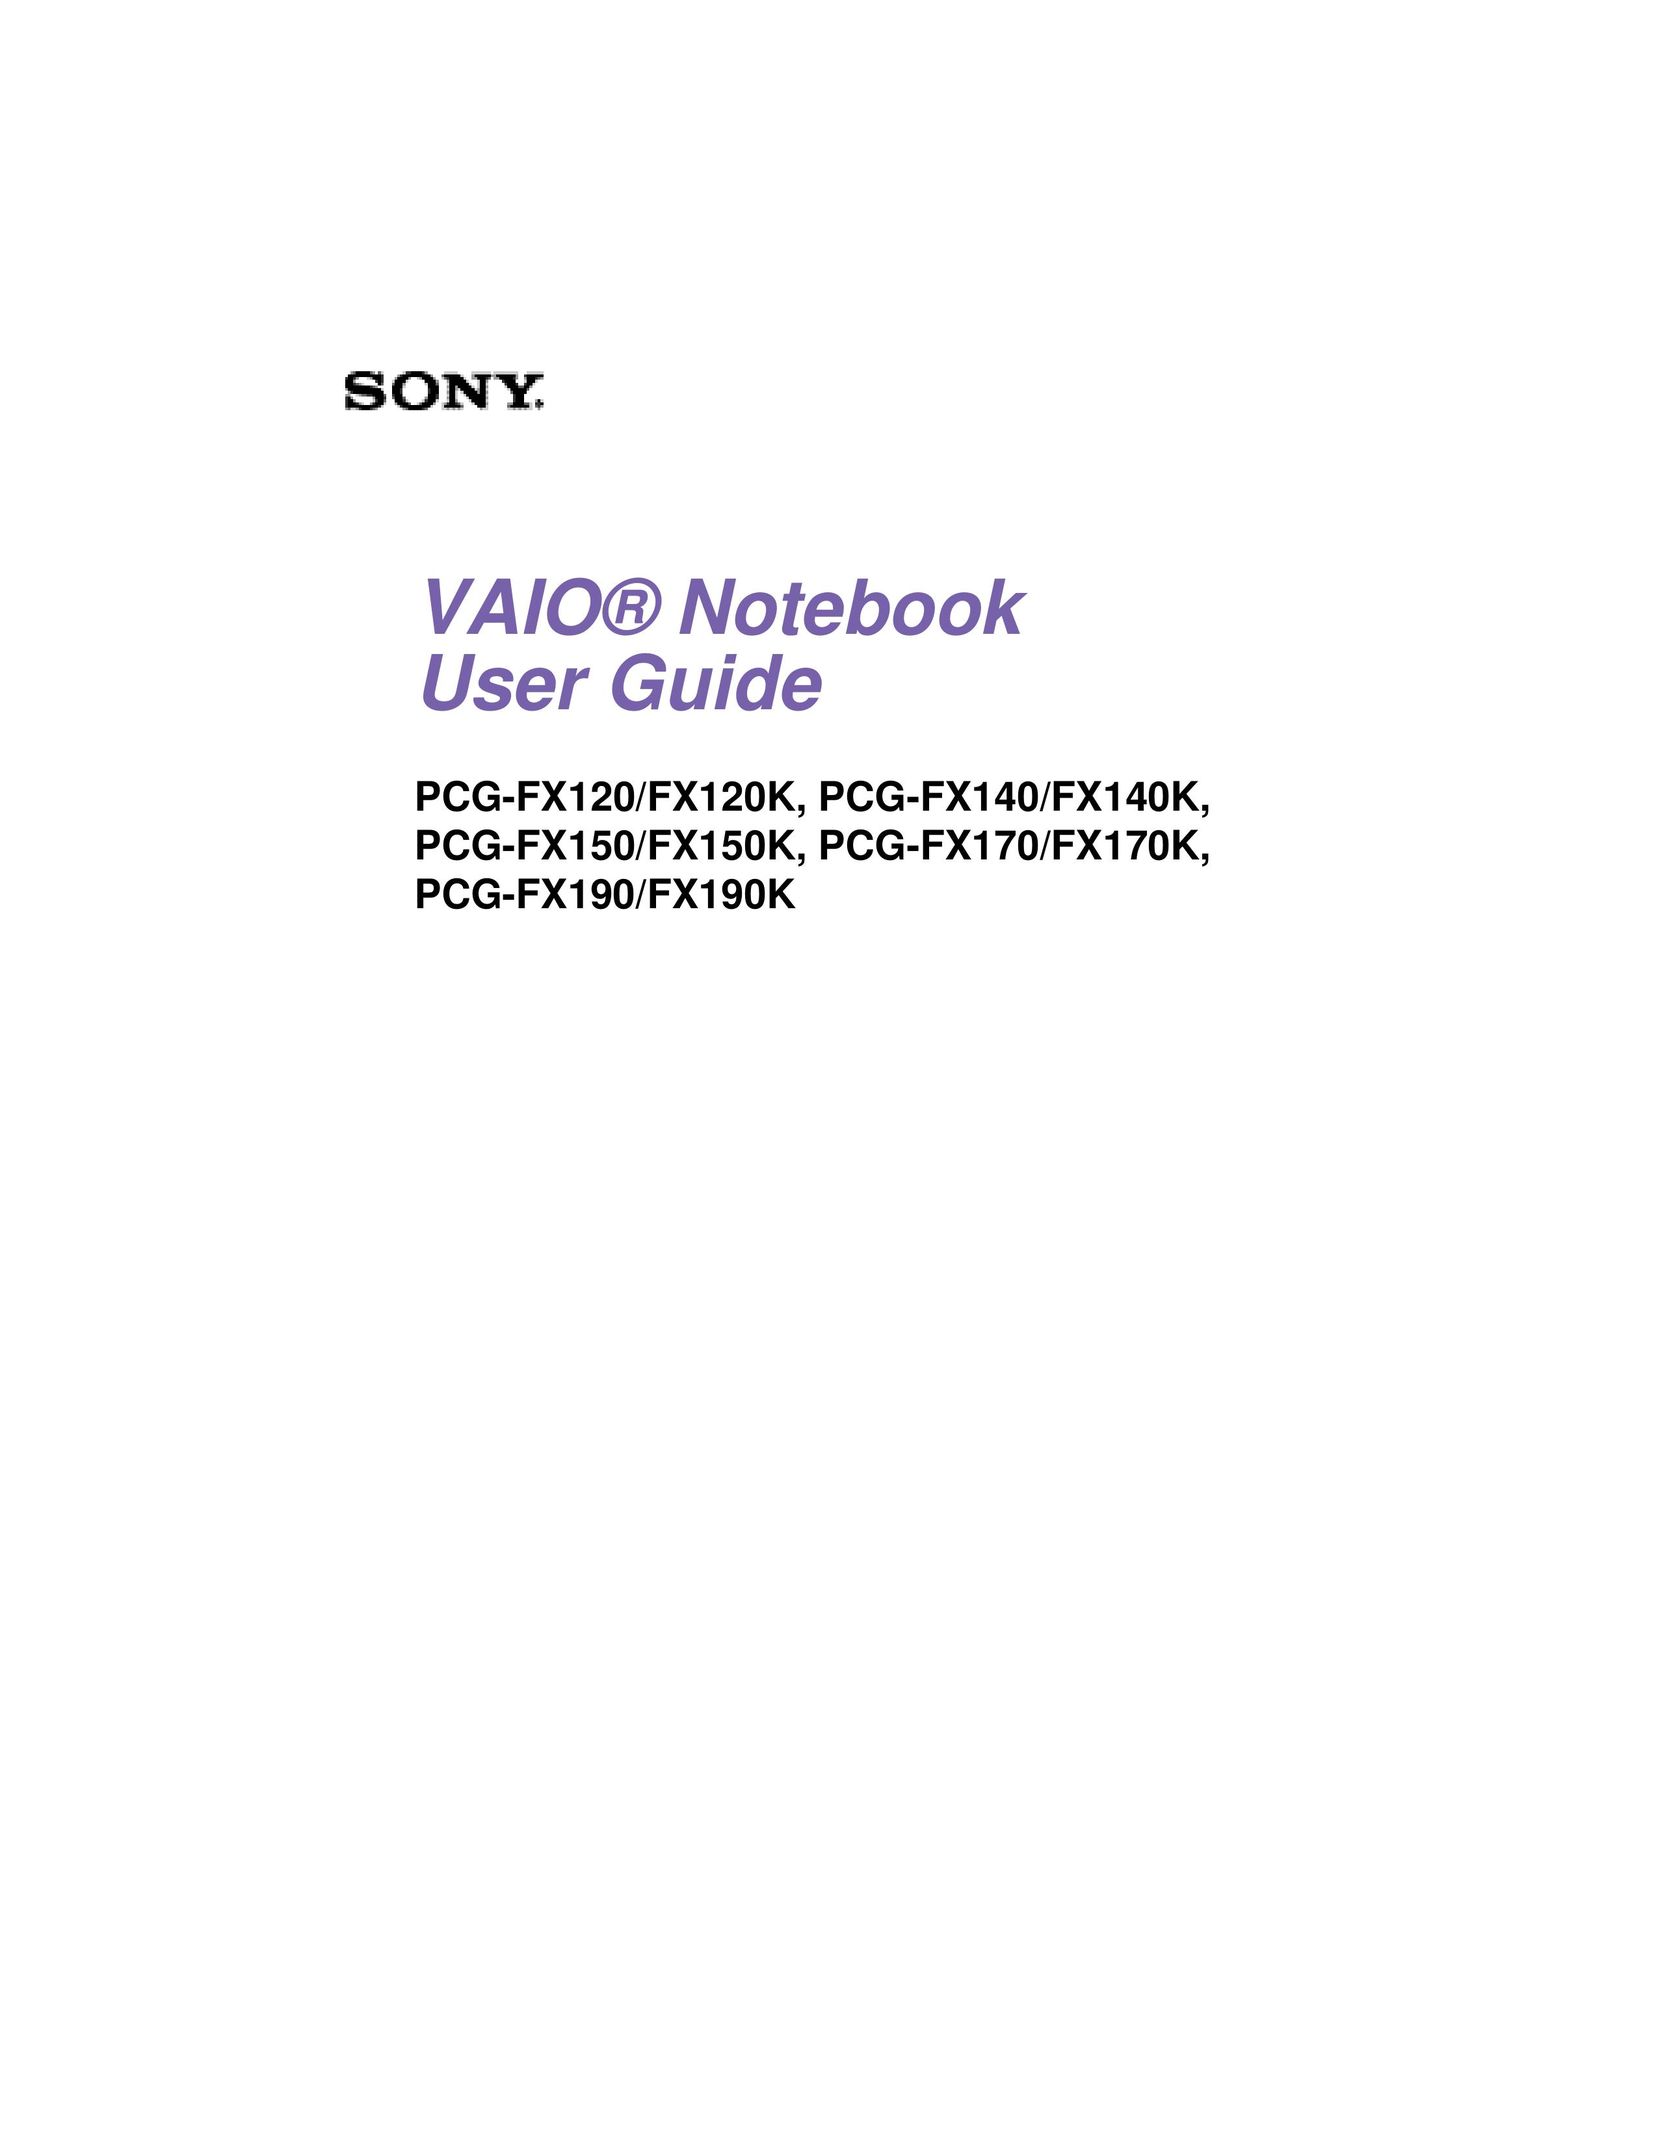 Sony CG-FX120 Laptop User Manual